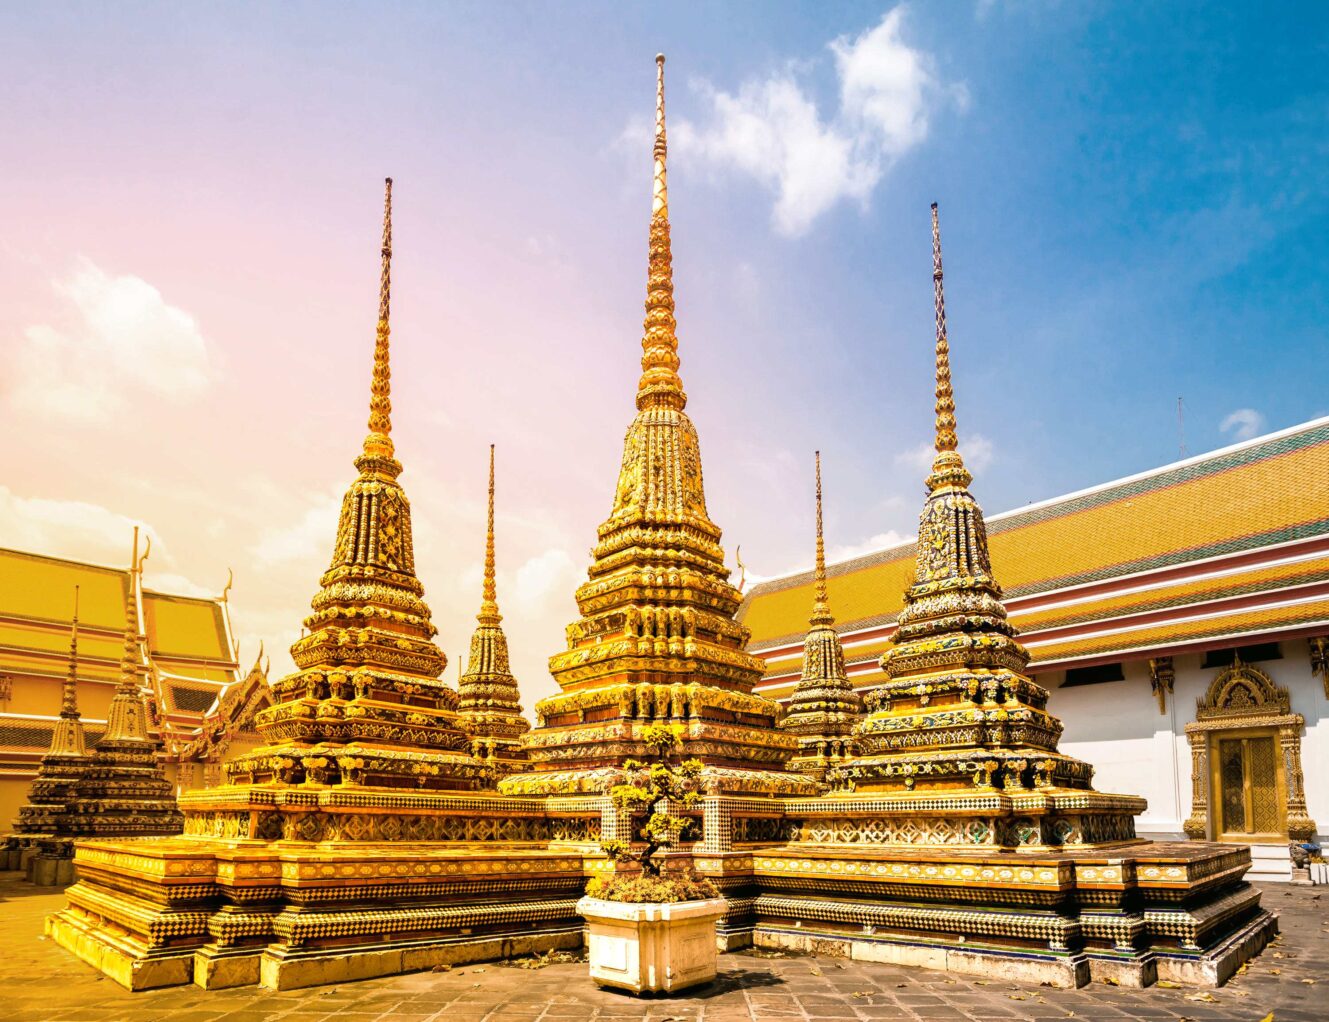 Bangkok's Wat Pho golden spires await guests of Viking cruise line.